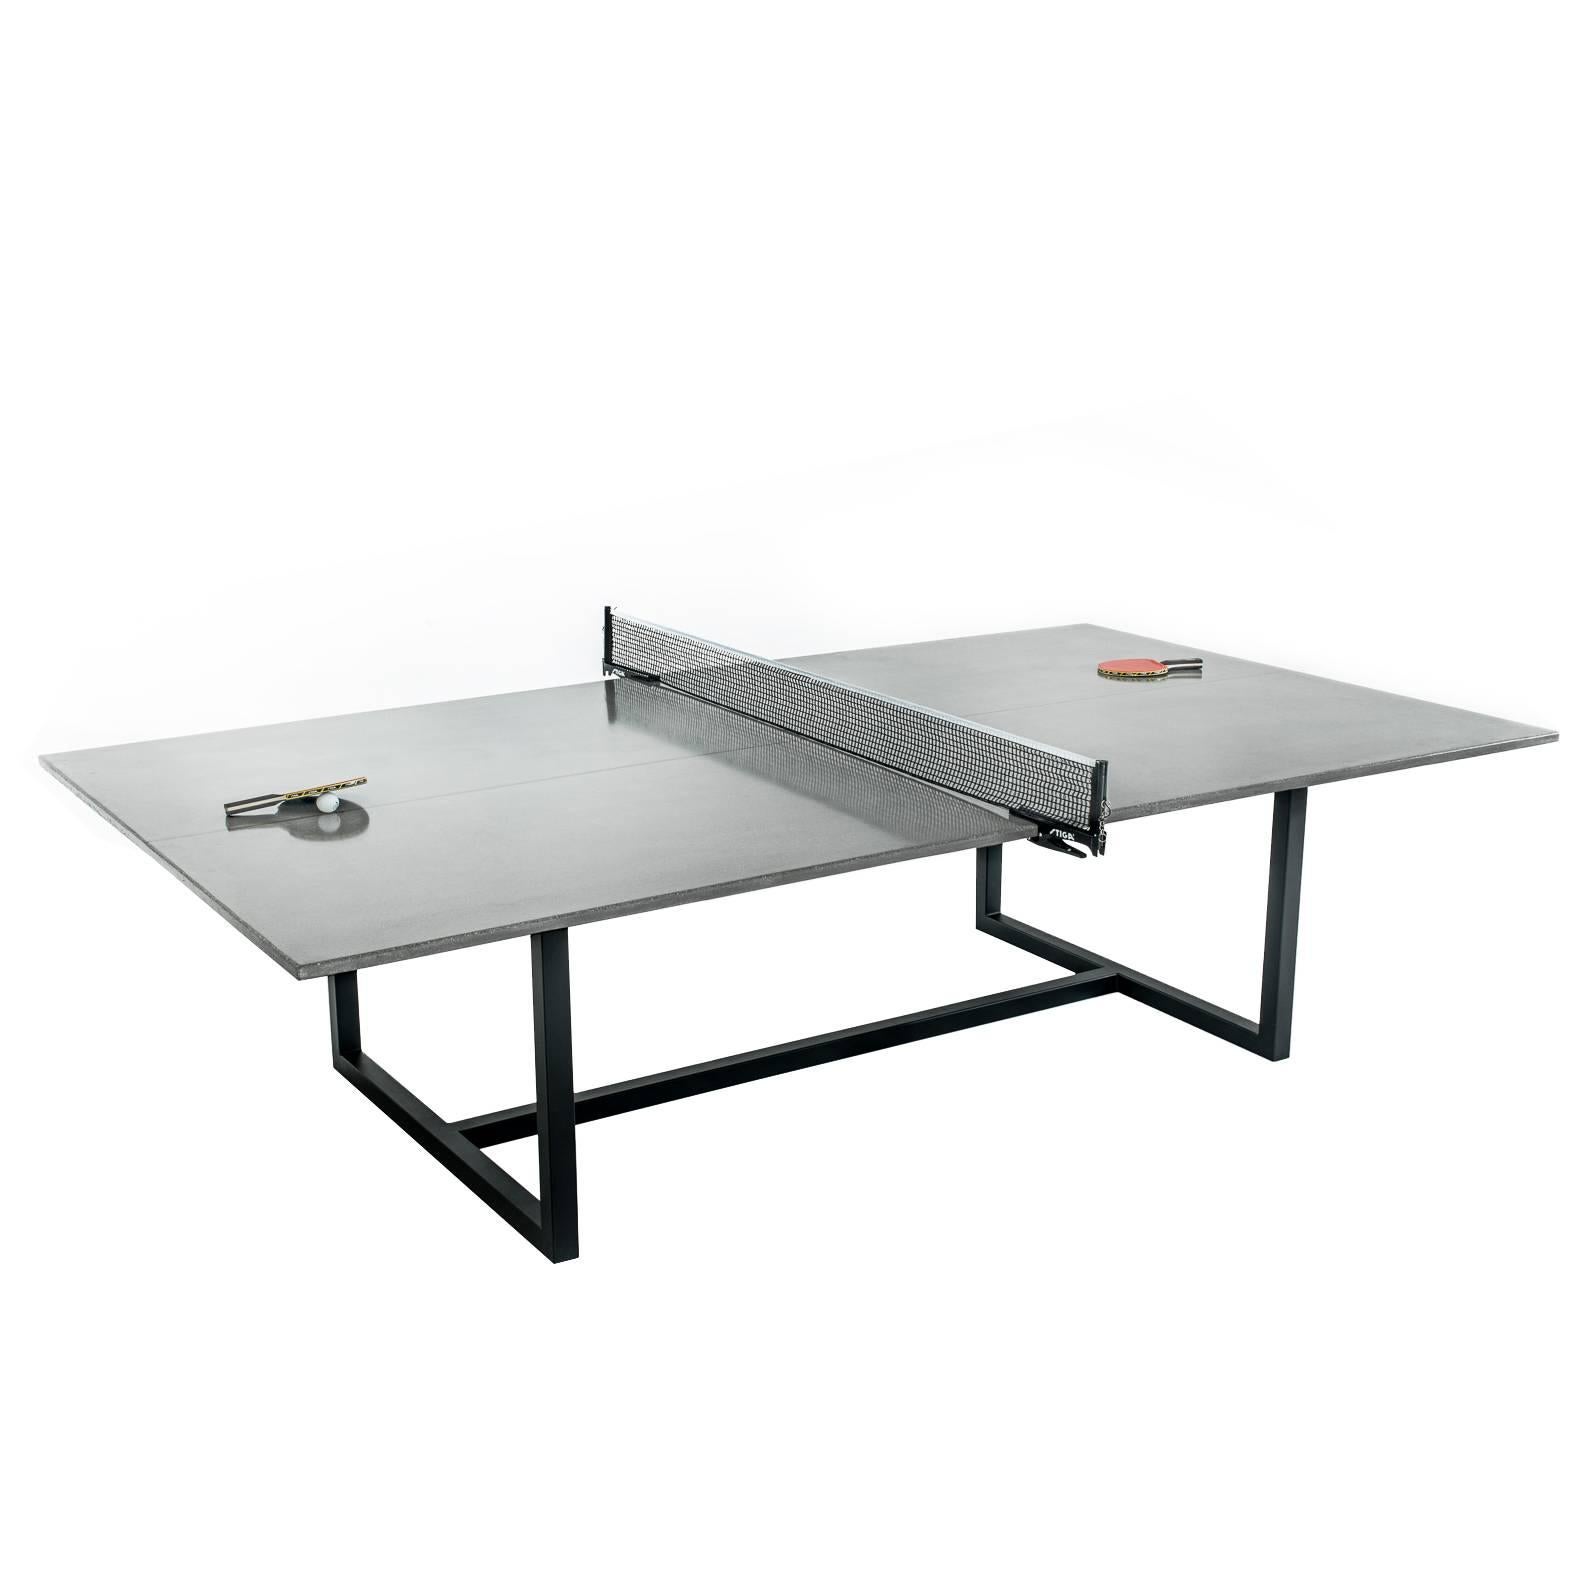 James de Wulf Vue Concrete Ping Pong Table, Powder Coated Steel Base - Standard